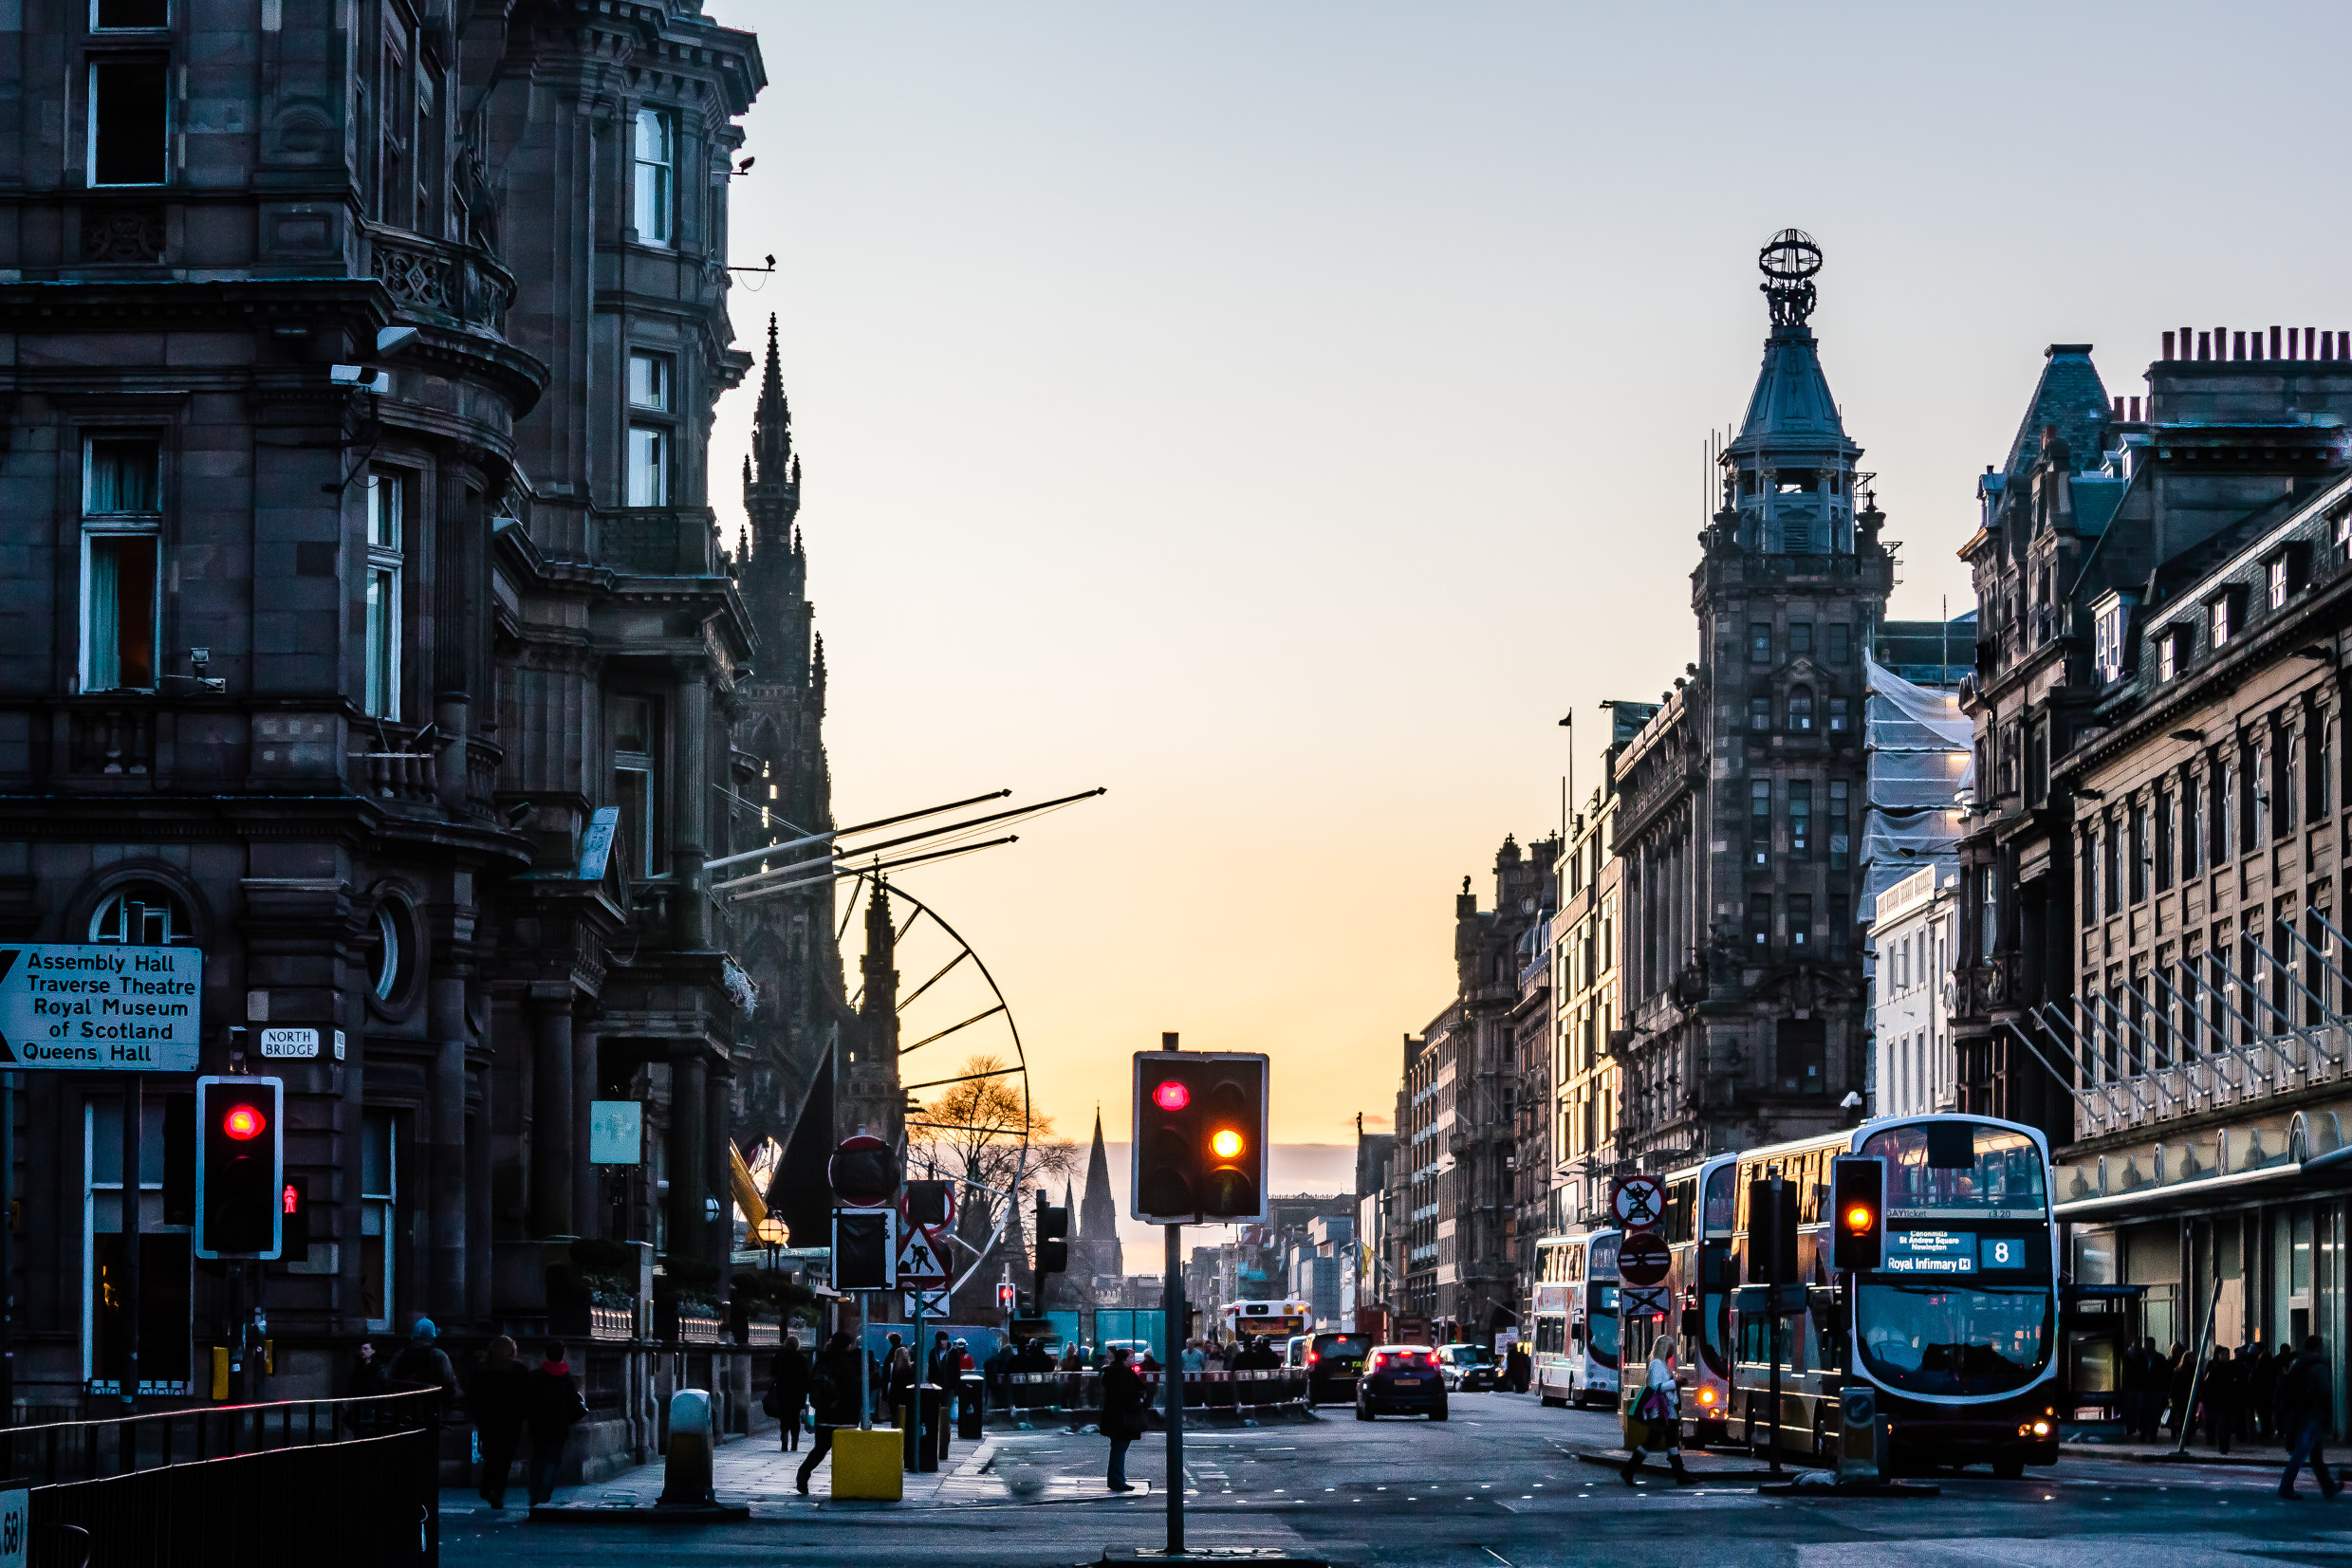 Poundland’s new store to boost Edinburgh’s Princes Street - Scottish